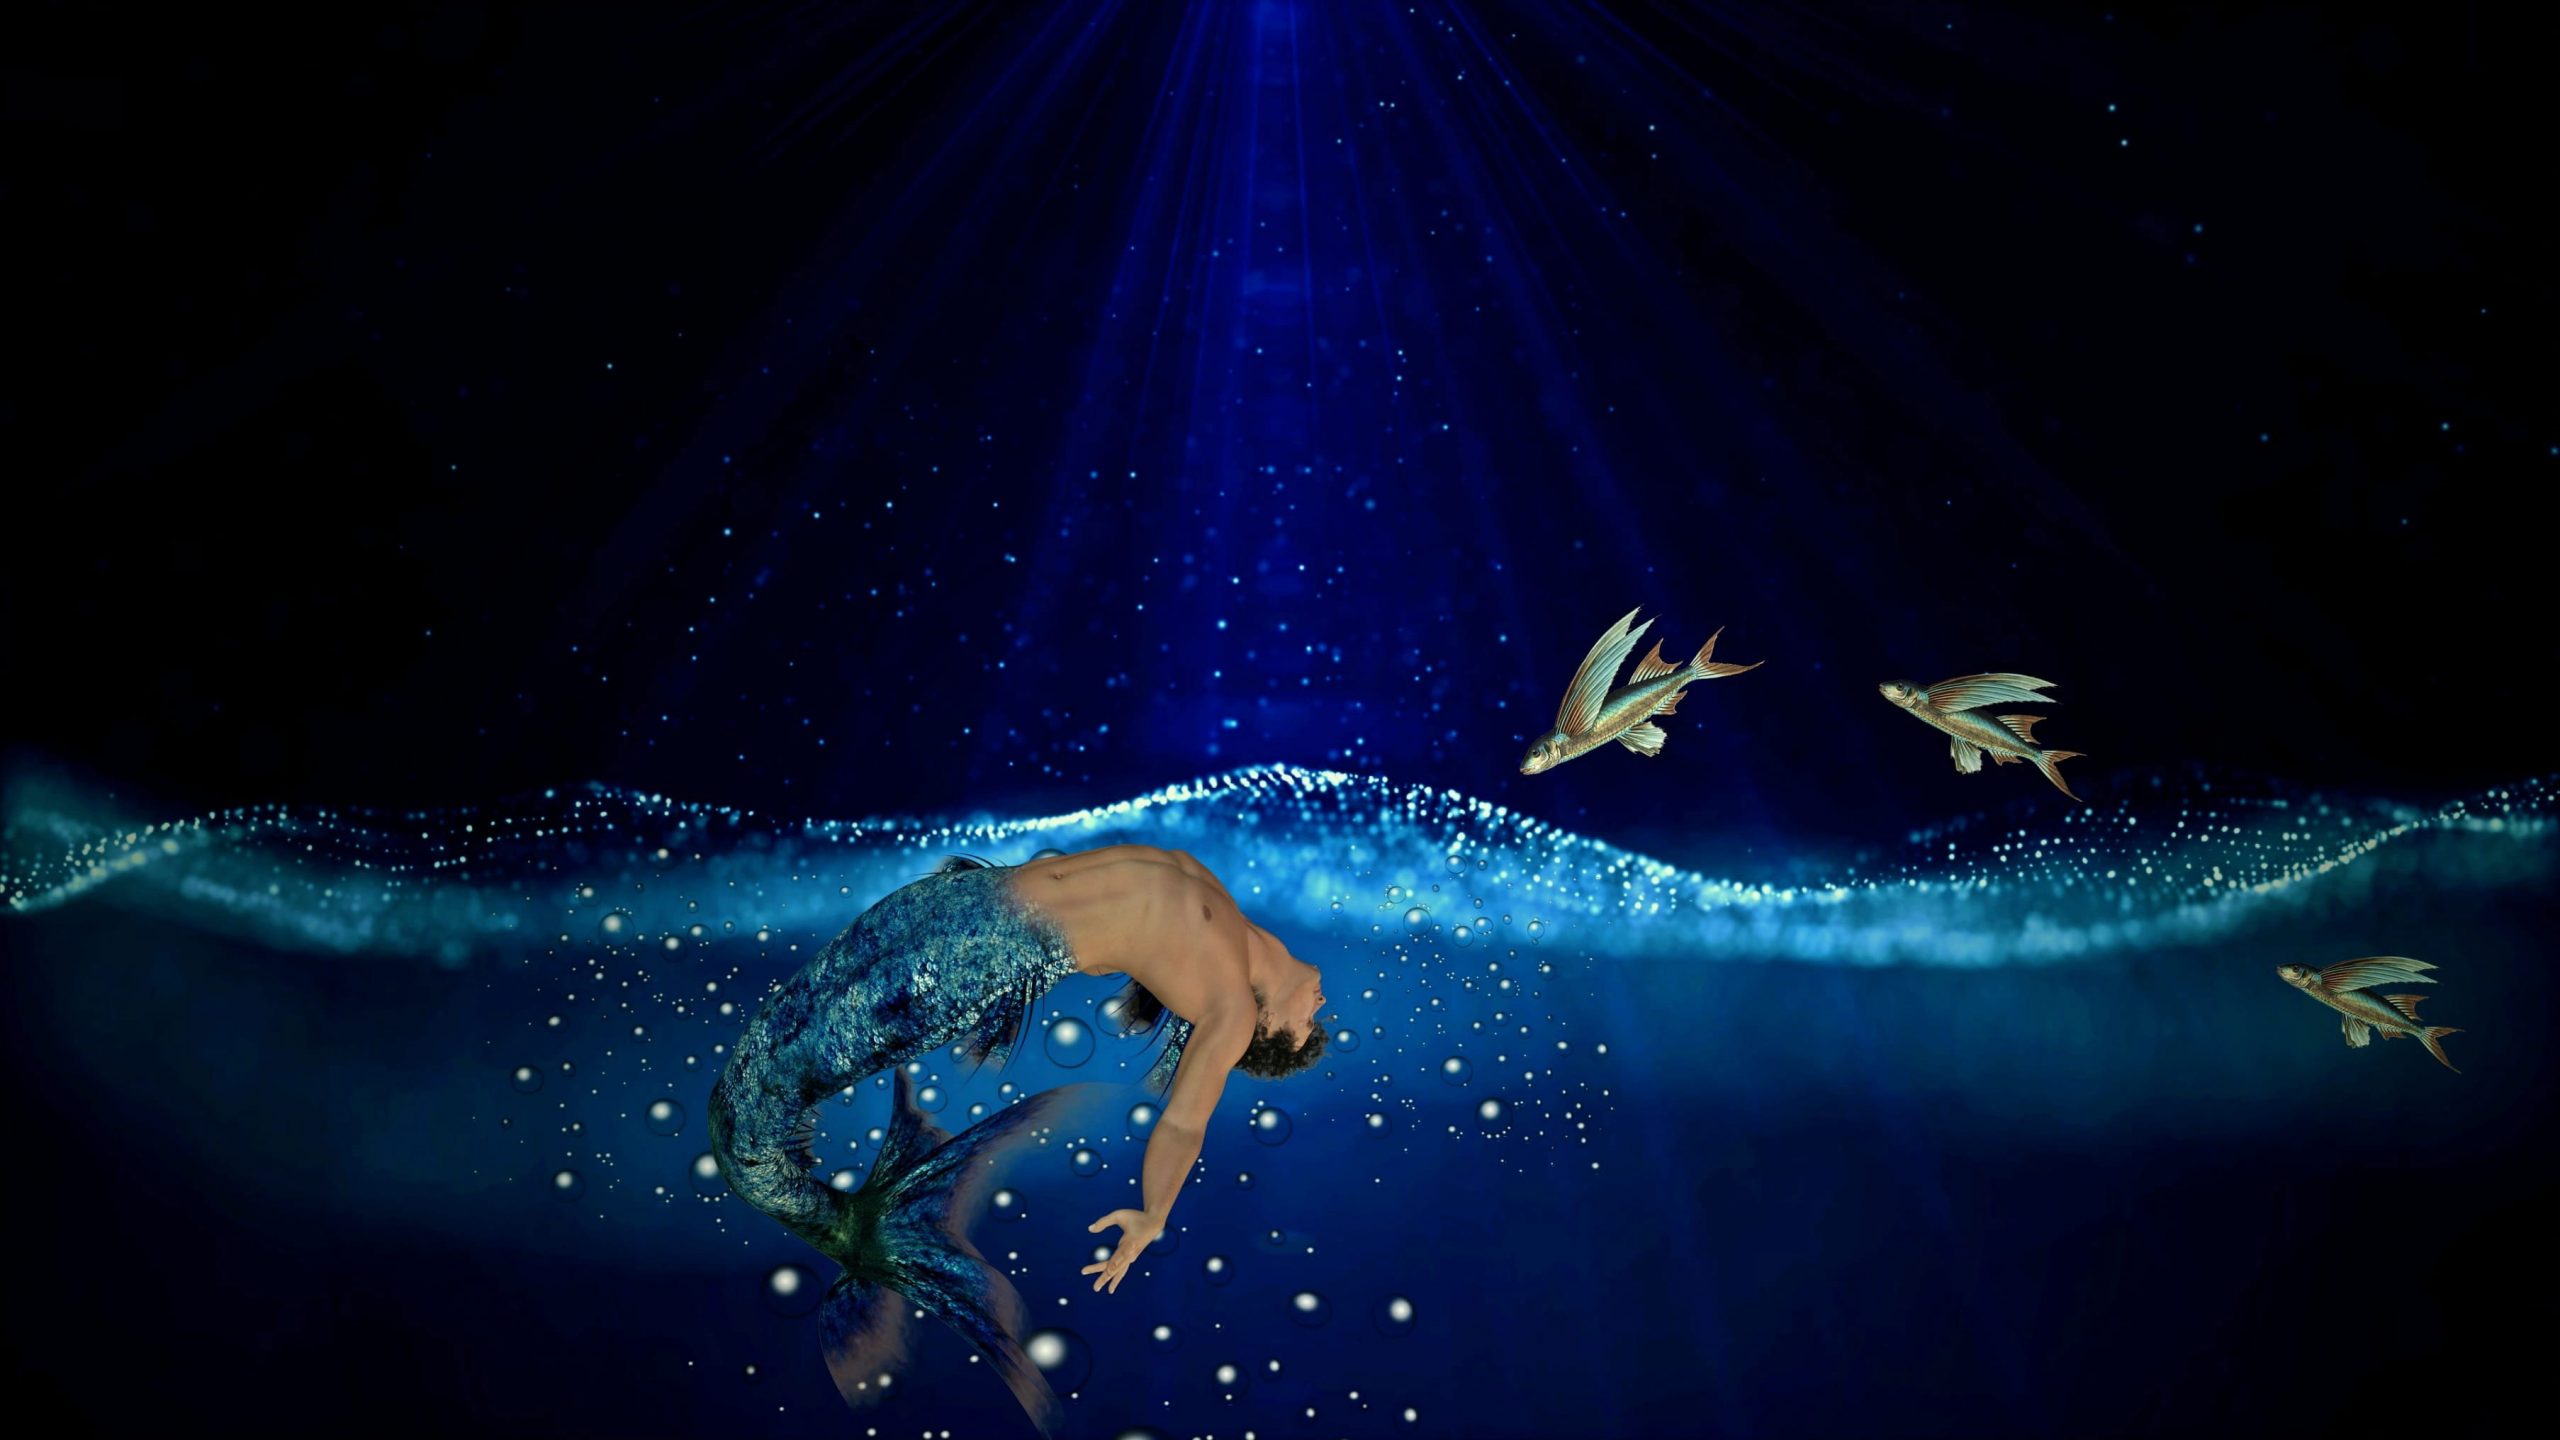 Mermaid in body of water near flying fish painting wallpaper, Sea, Water